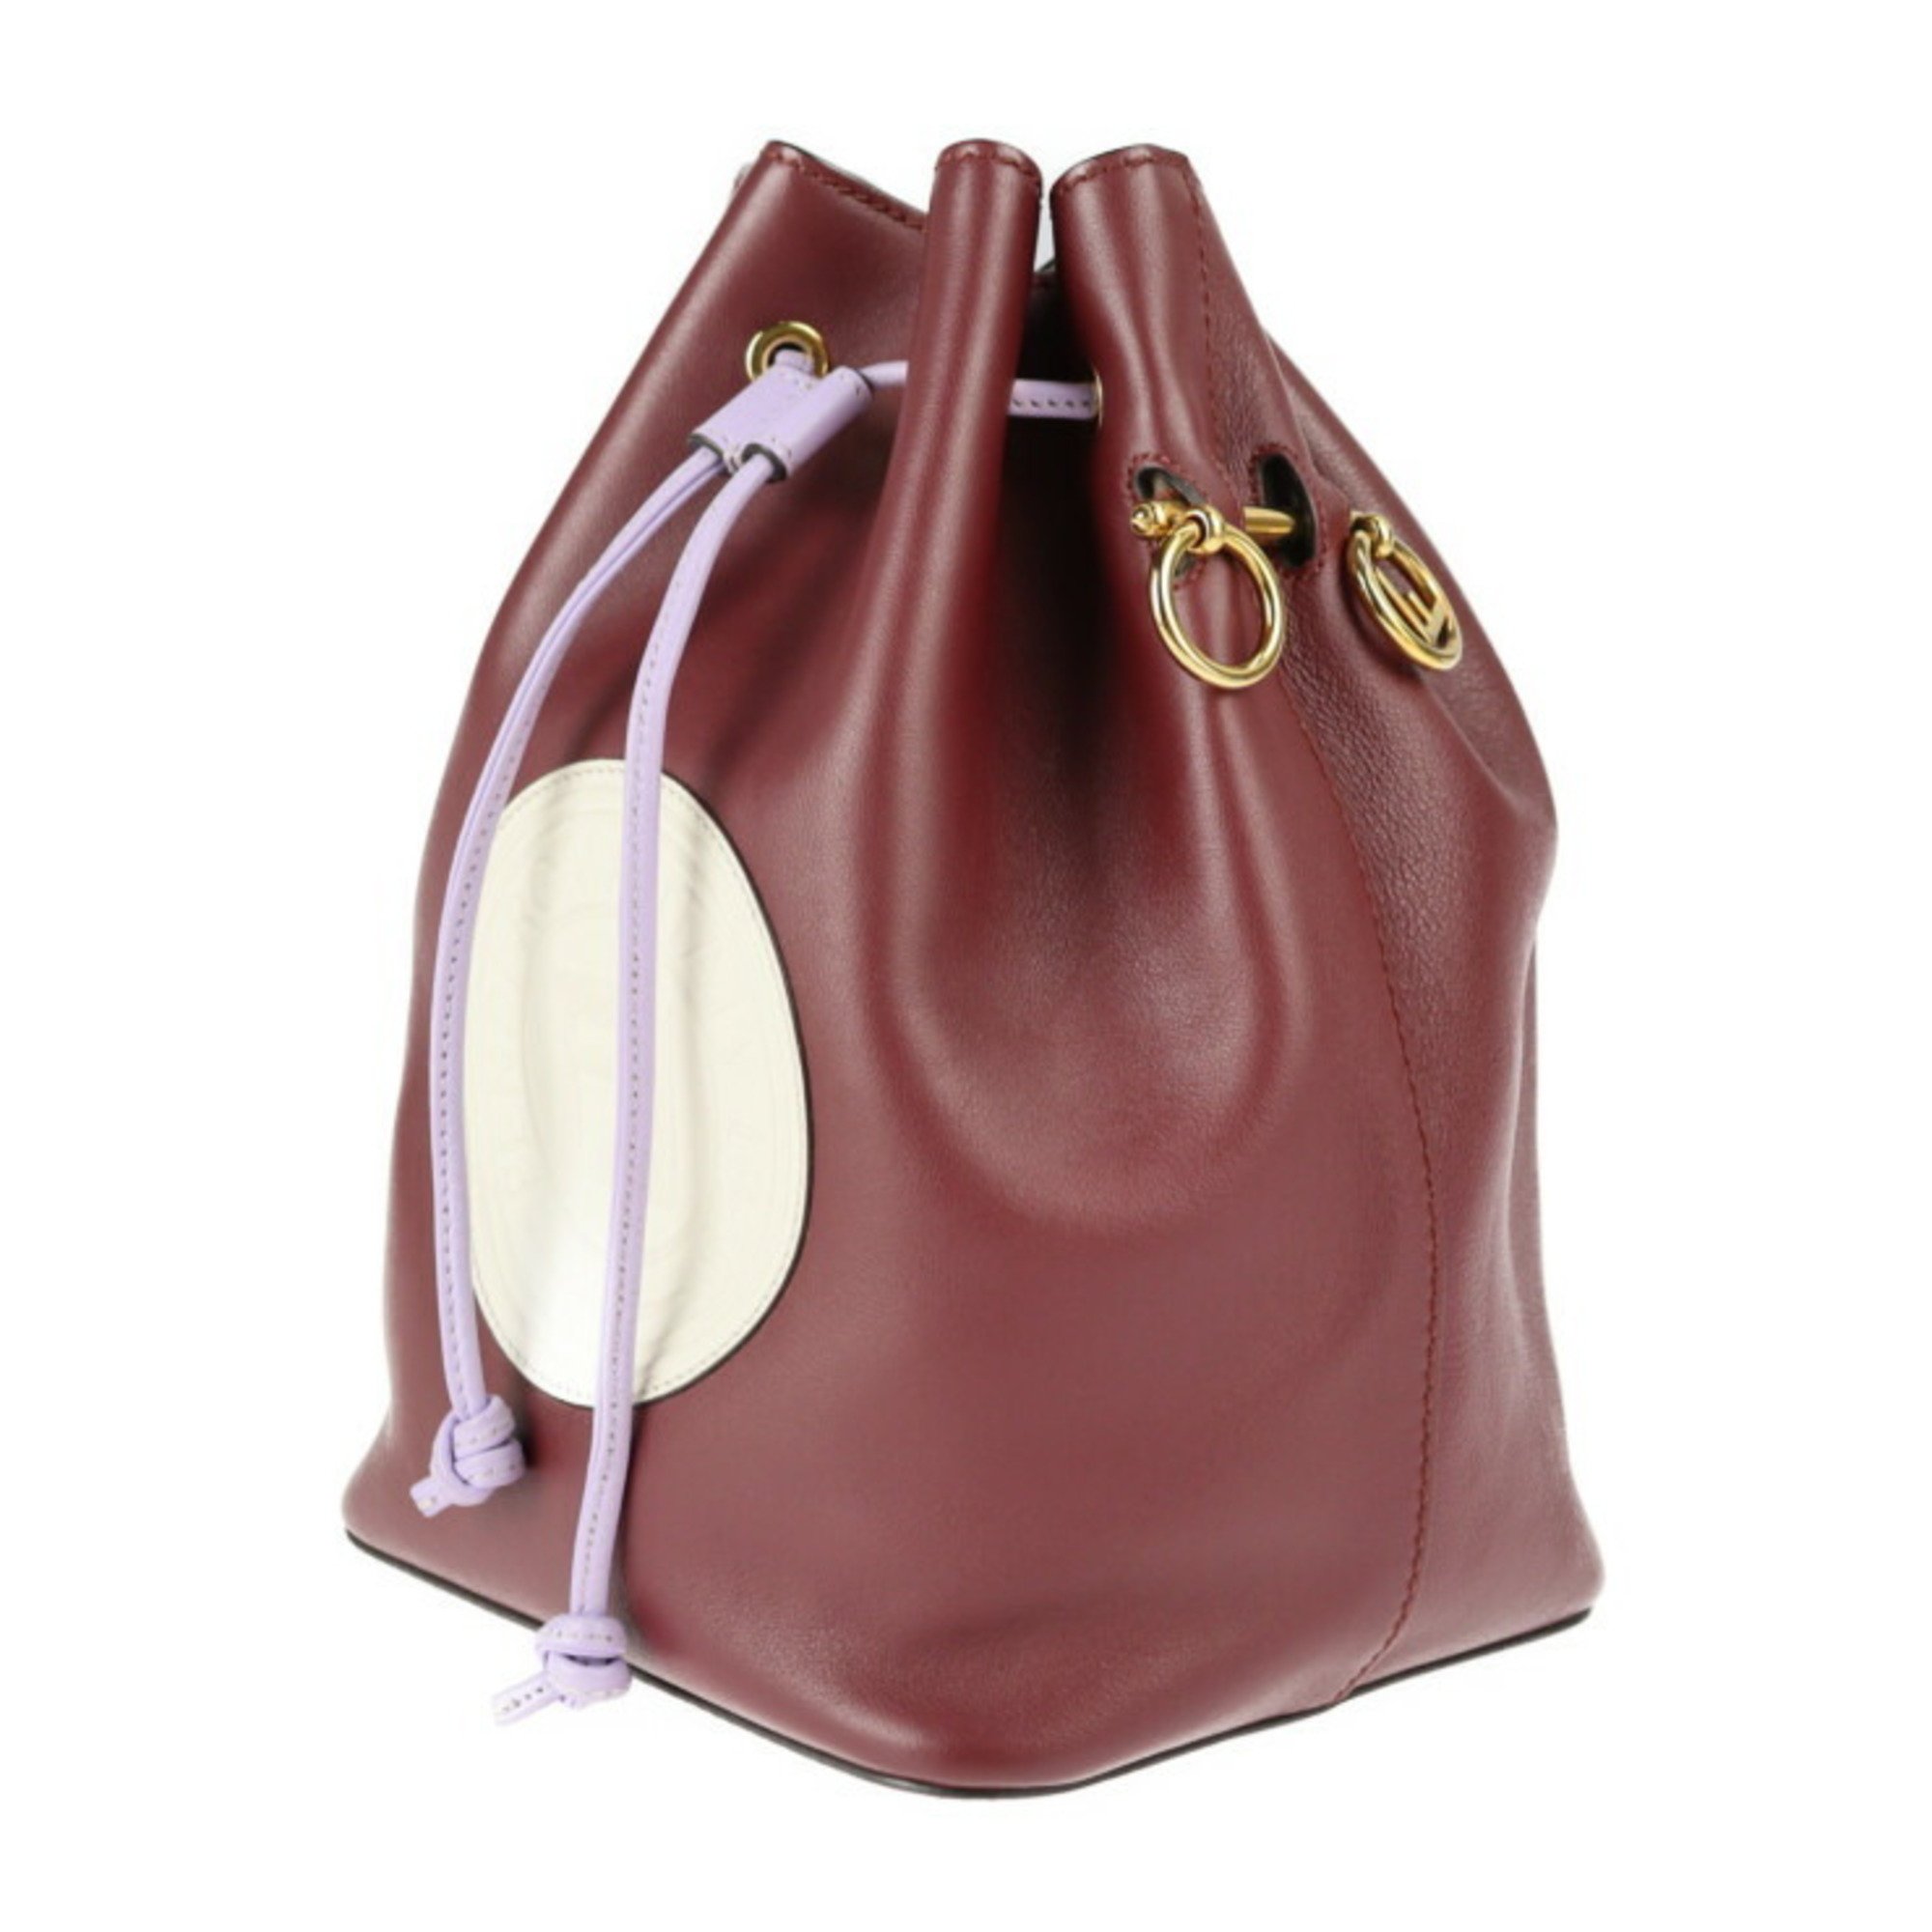 FENDI Fendi Mon Tresor Shoulder Bag 8BT298 Leather Bordeaux x Light Purple White Gold Hardware Bucket Drawstring Logo